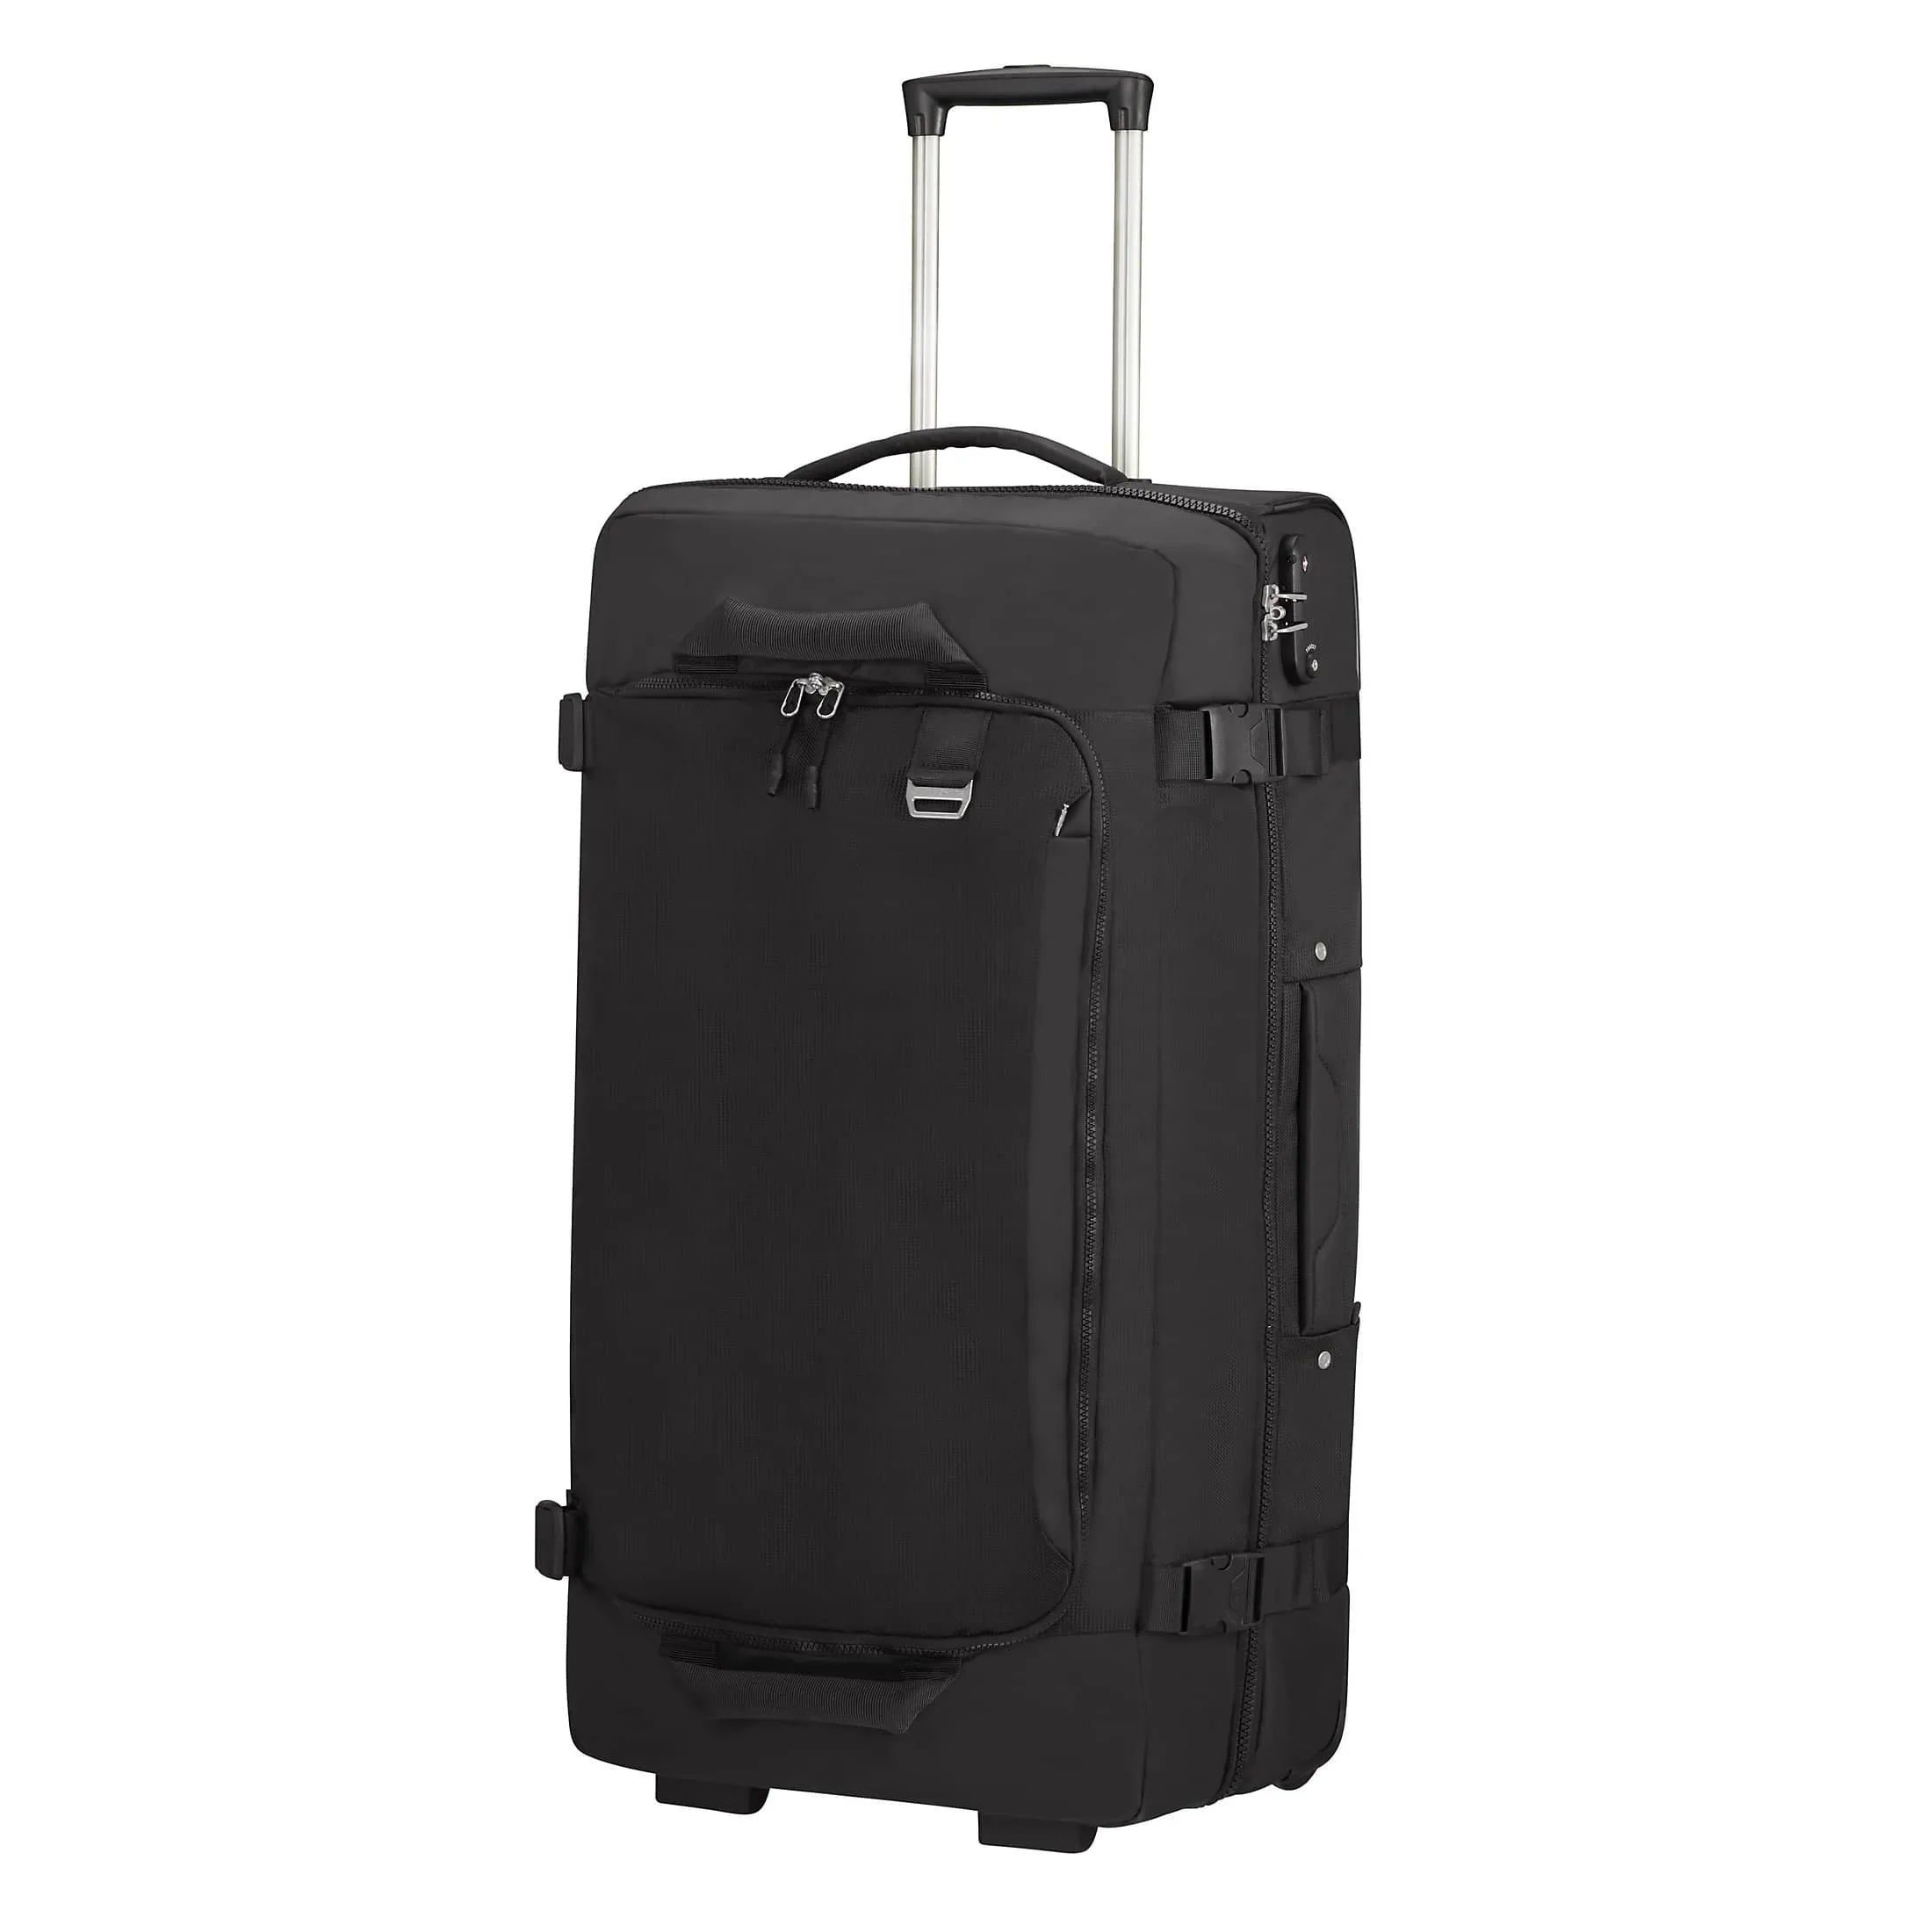 Samsonite Midtown Duffle travel bag with wheels 79 cm - Black